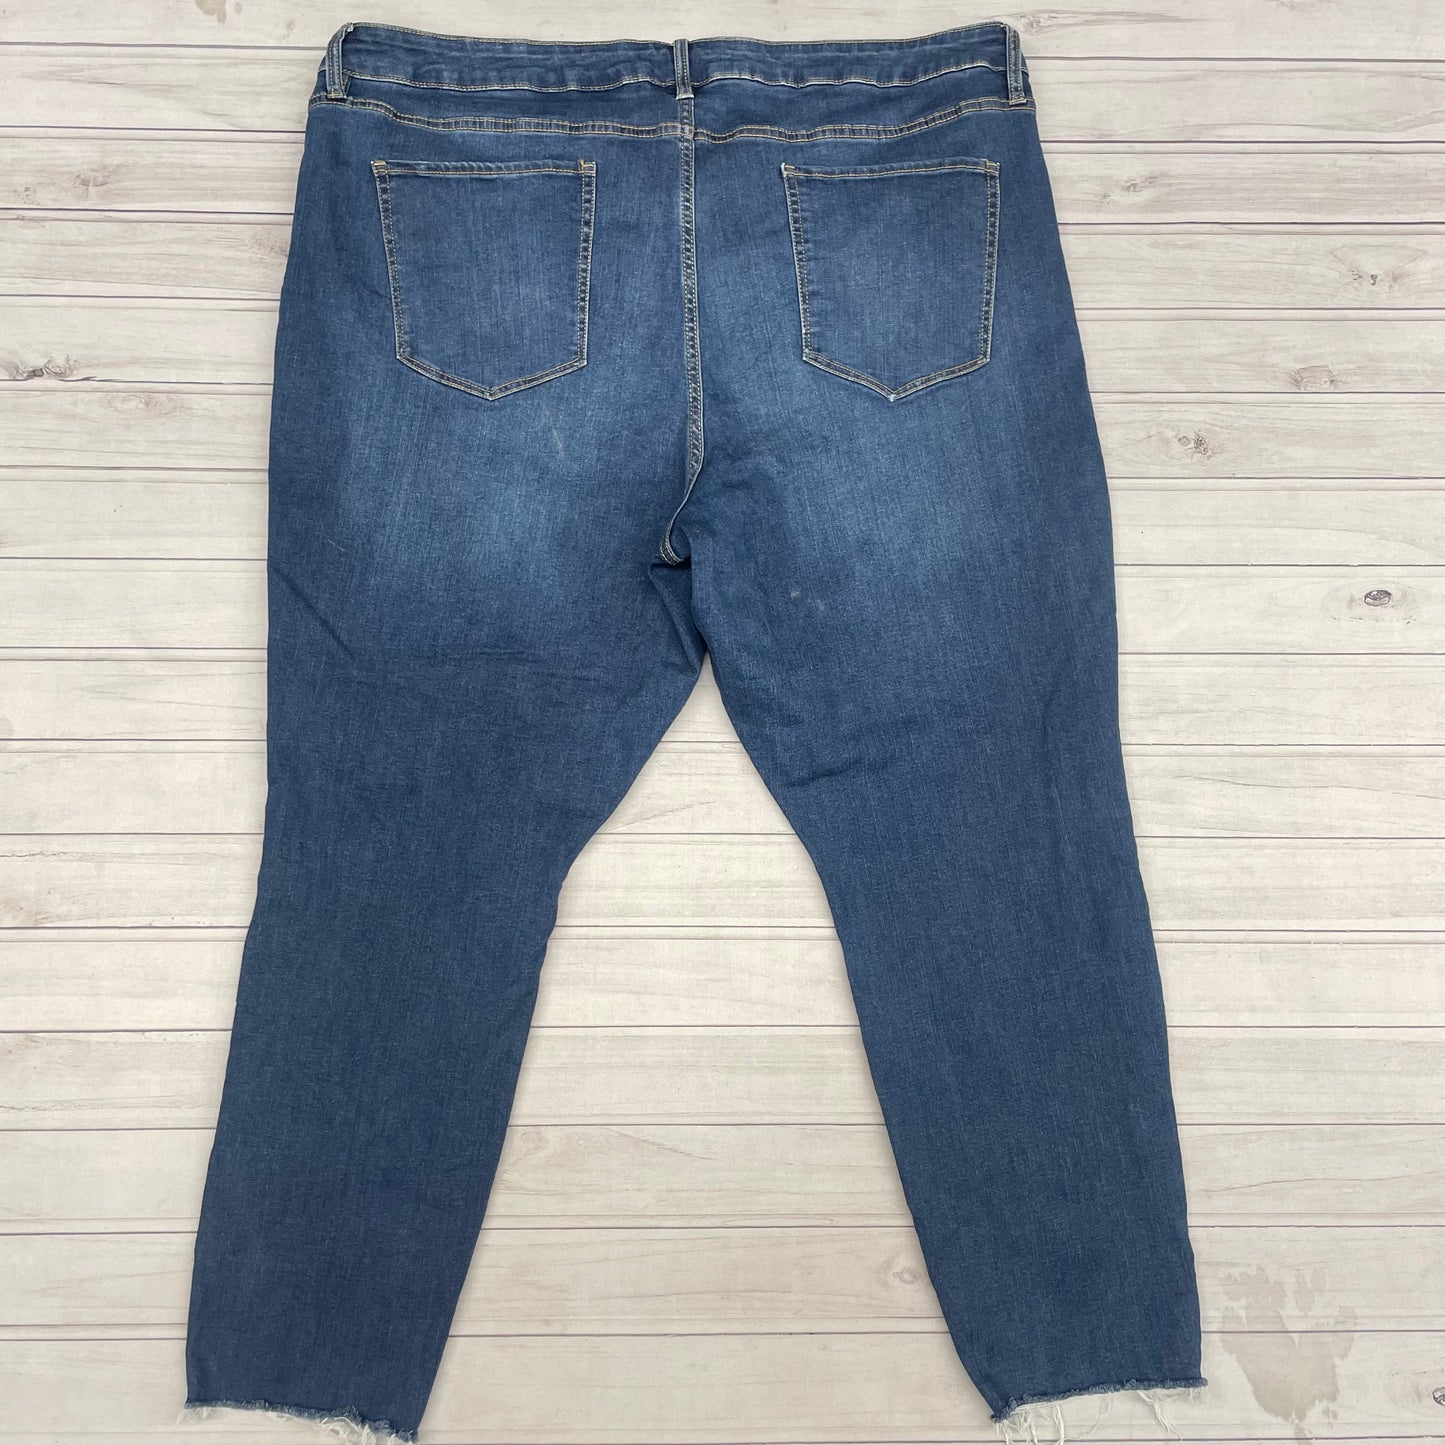 Jeans Cropped By Ava & Viv  Size: 26w